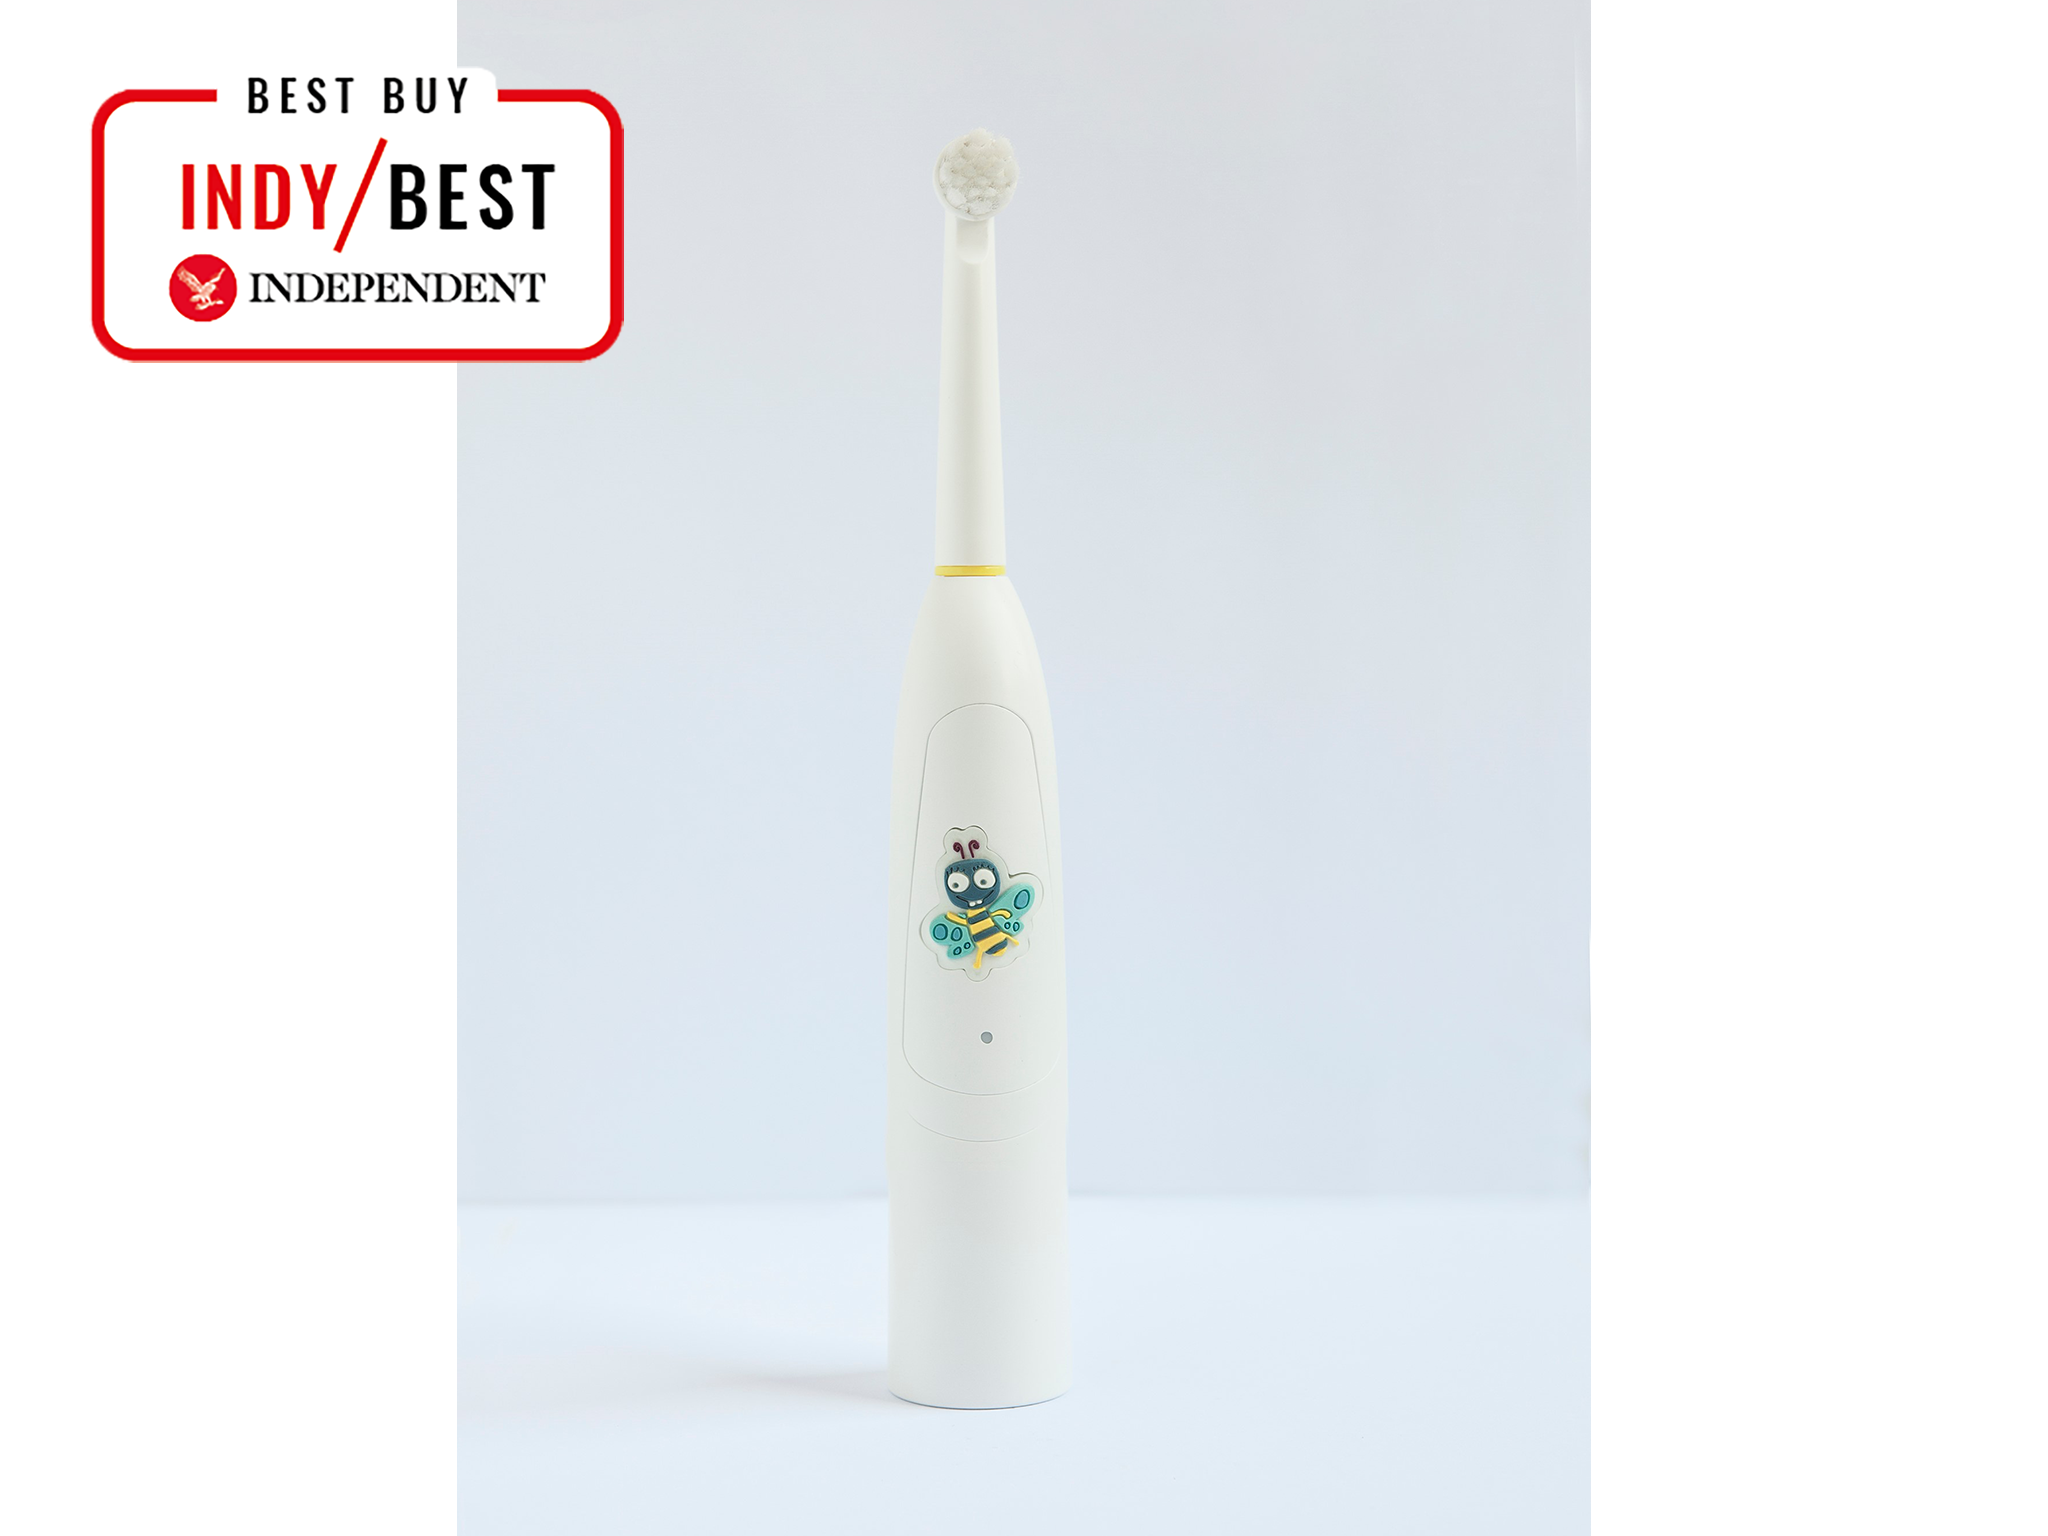 Jack N’ Jill buzzy brush electric musical toothbrush